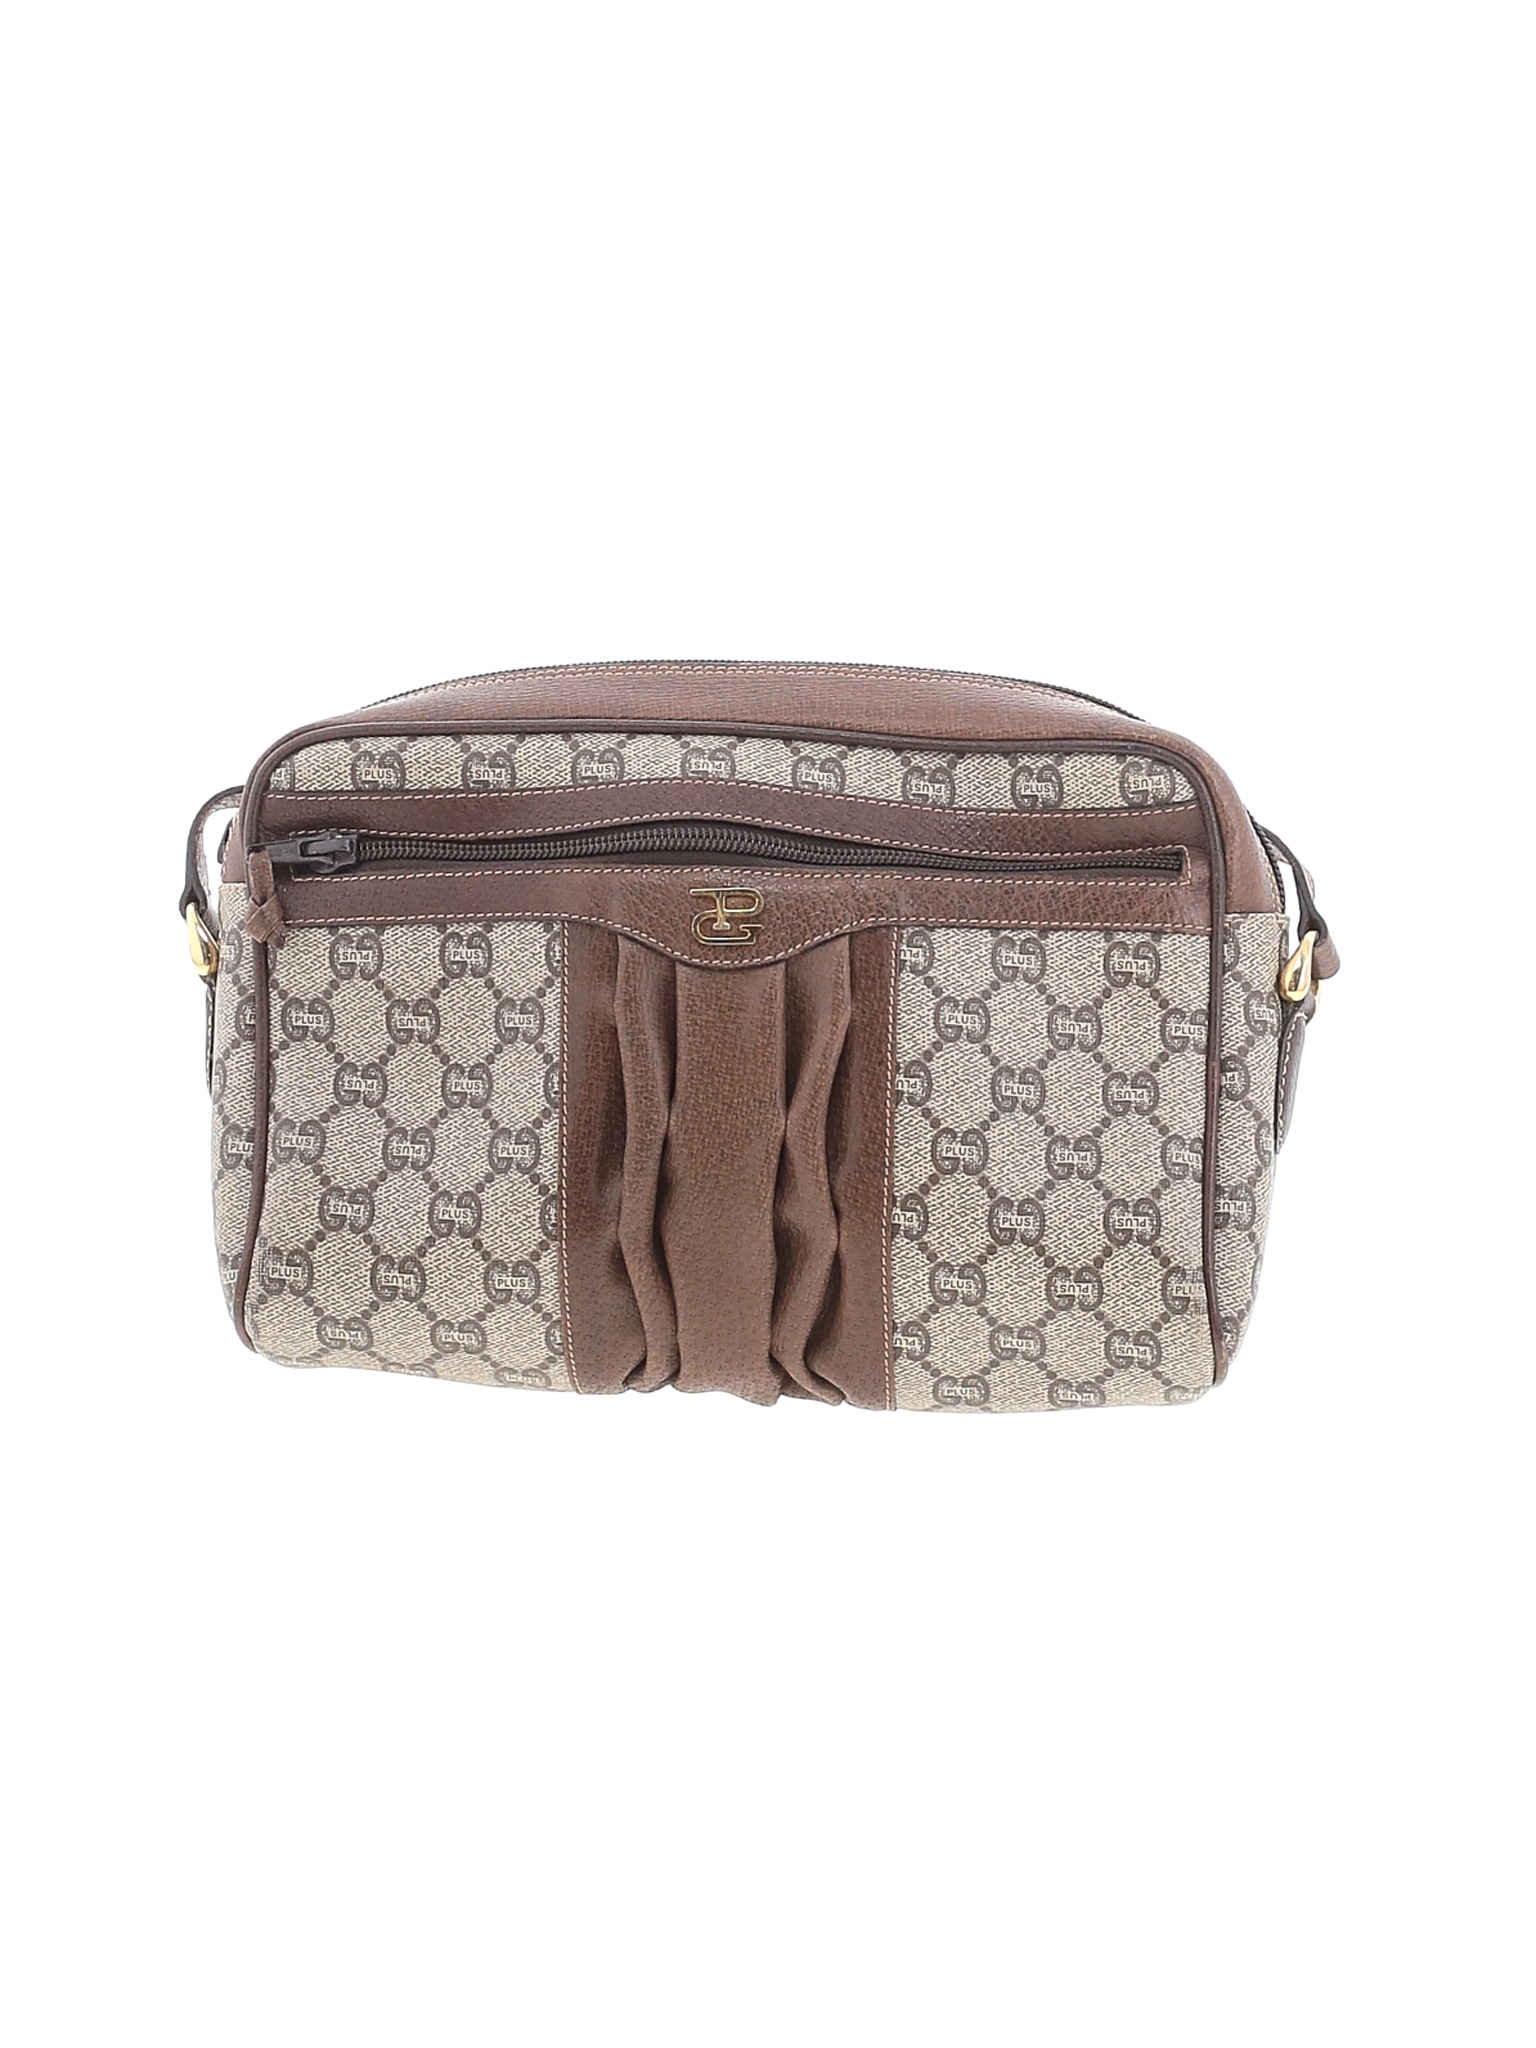 Plus Gucci Women Brown Crossbody Bag One Size | eBay